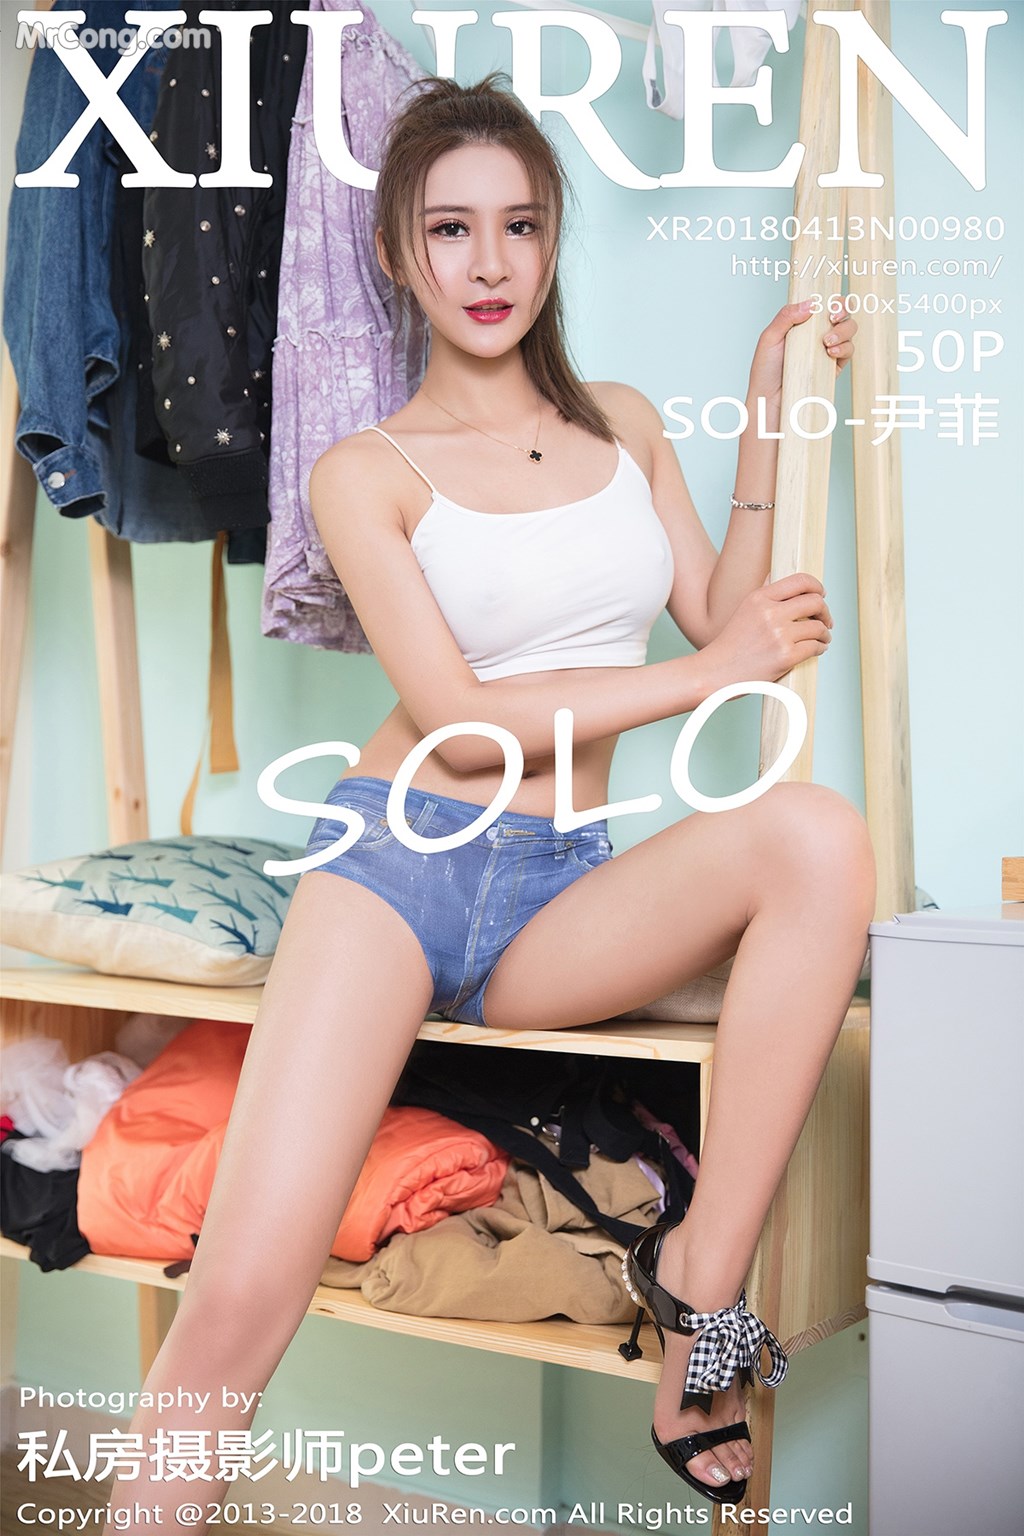 XIUREN No.980: Model SOLO- 尹 菲 (51 photos) photo 1-0